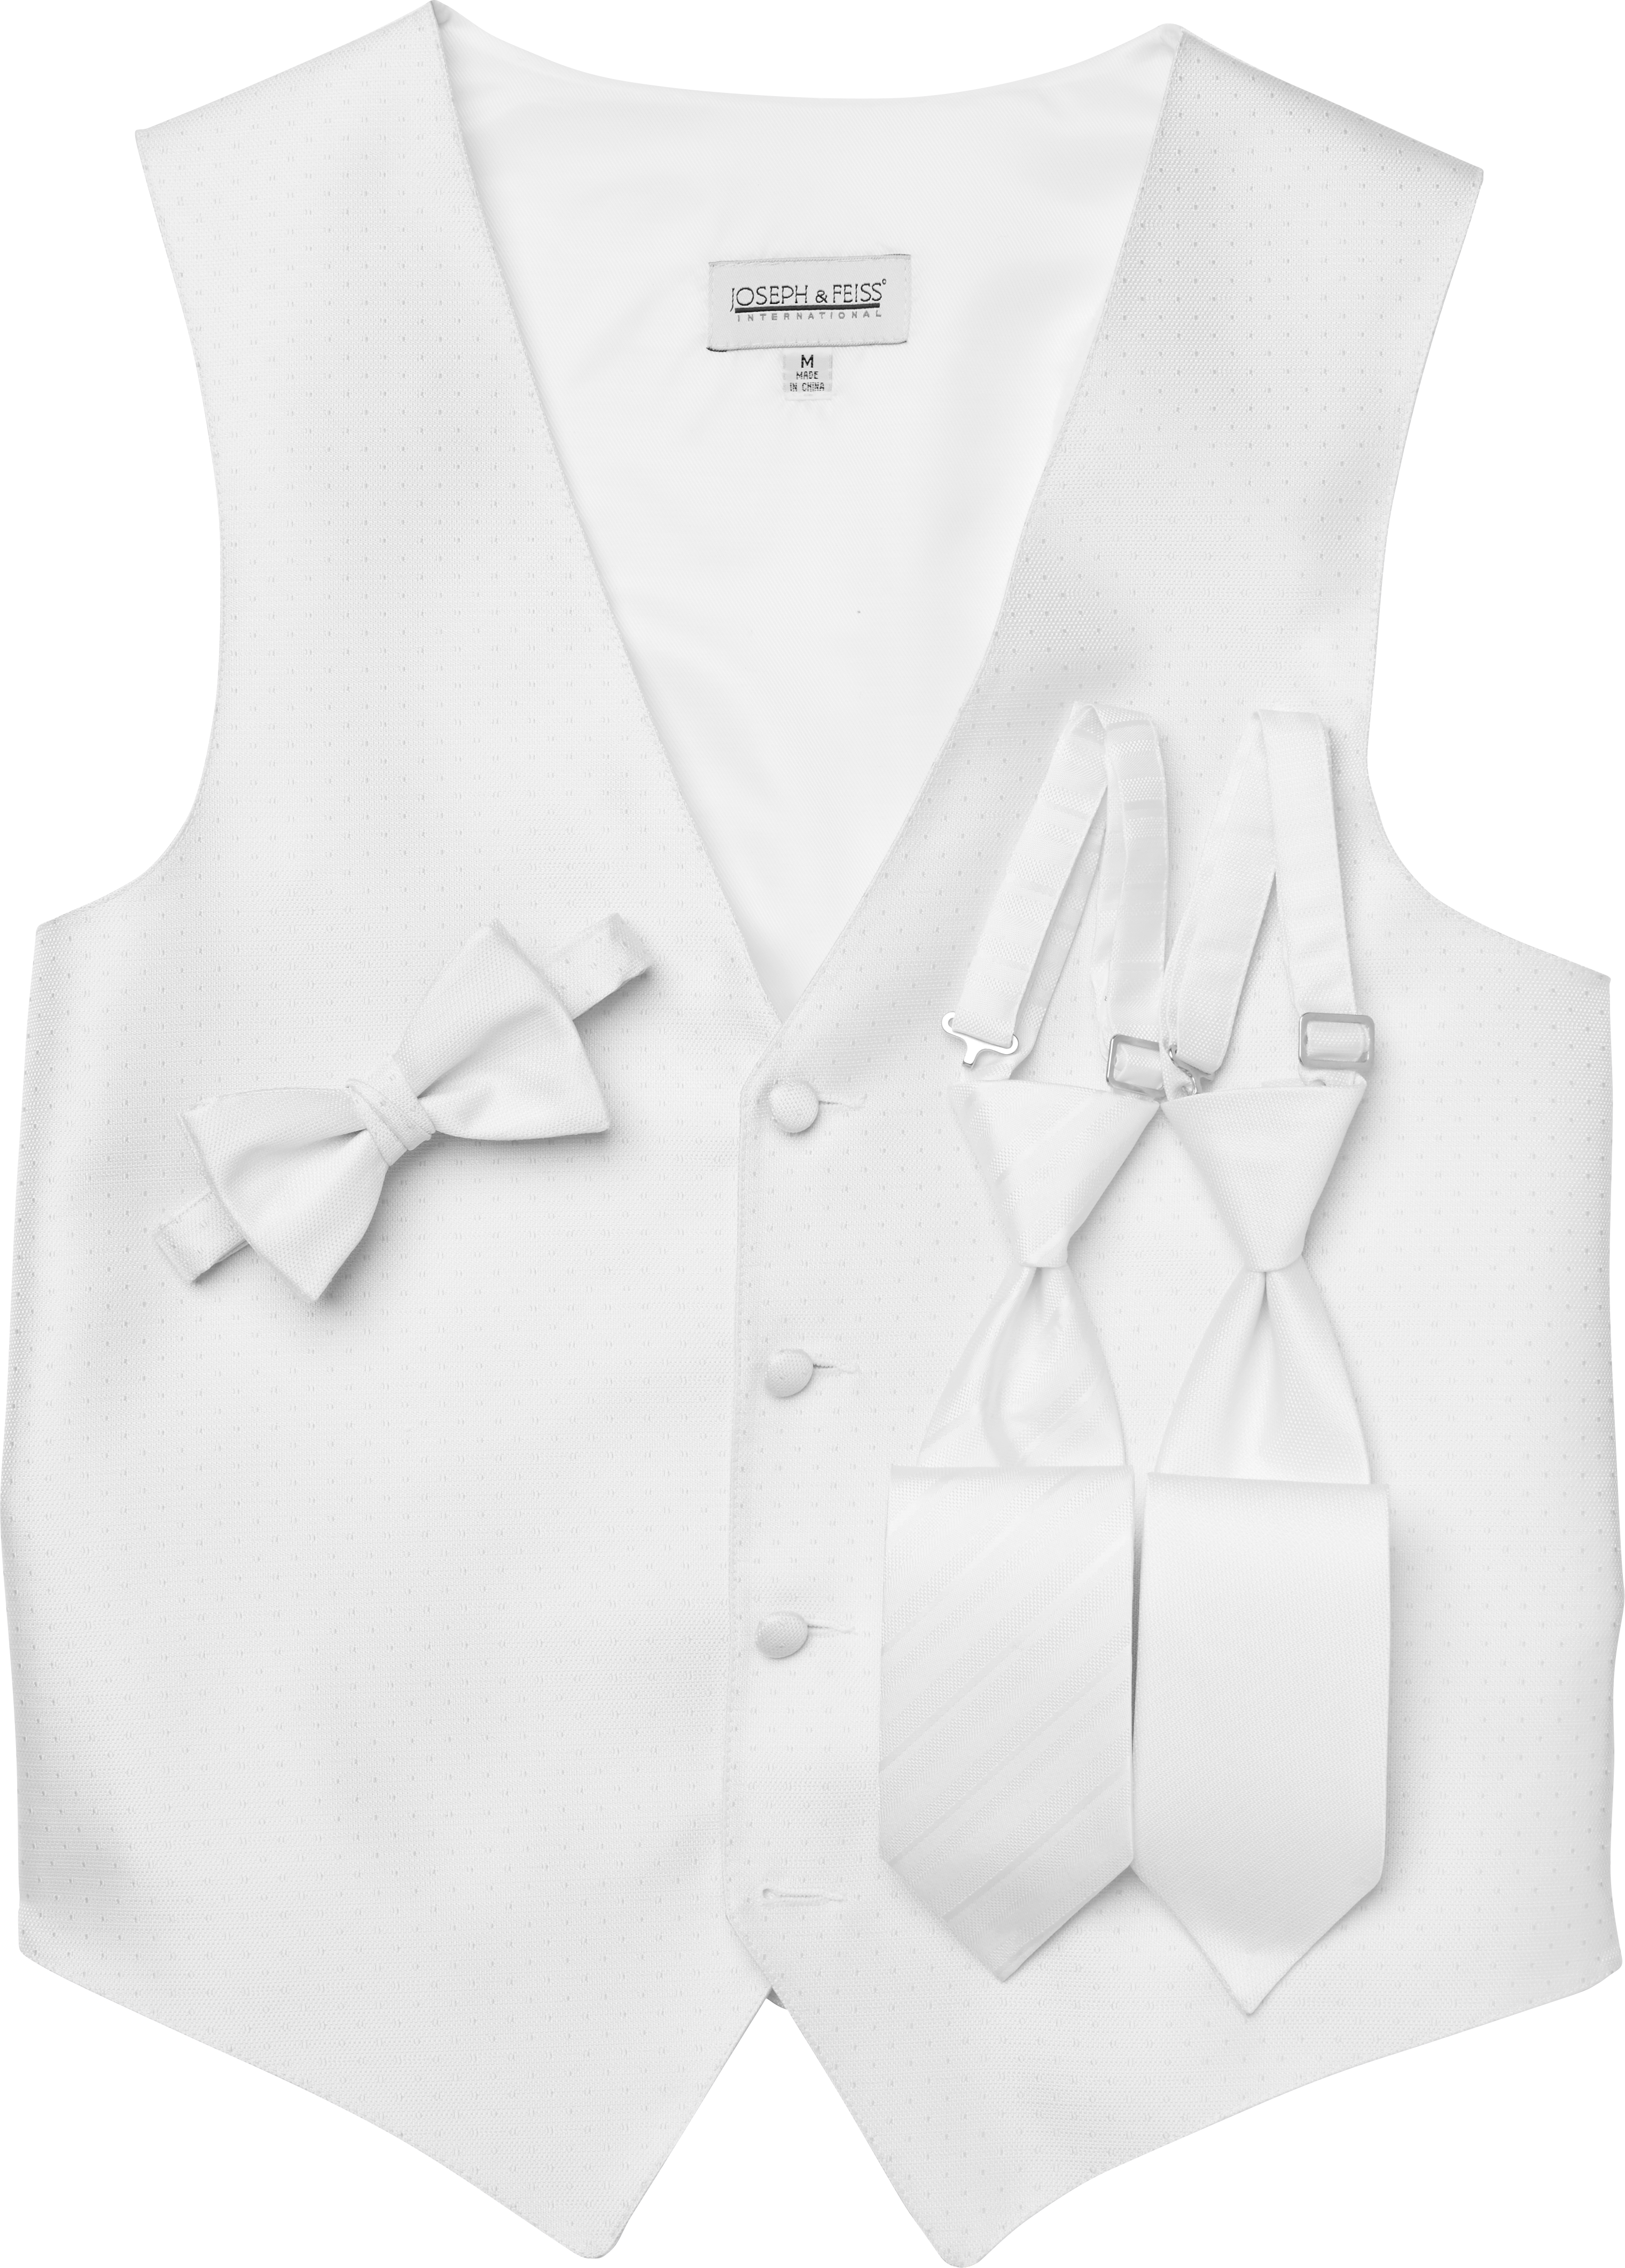 Prom Tuxedo Rental Styles, Prom Suit Looks